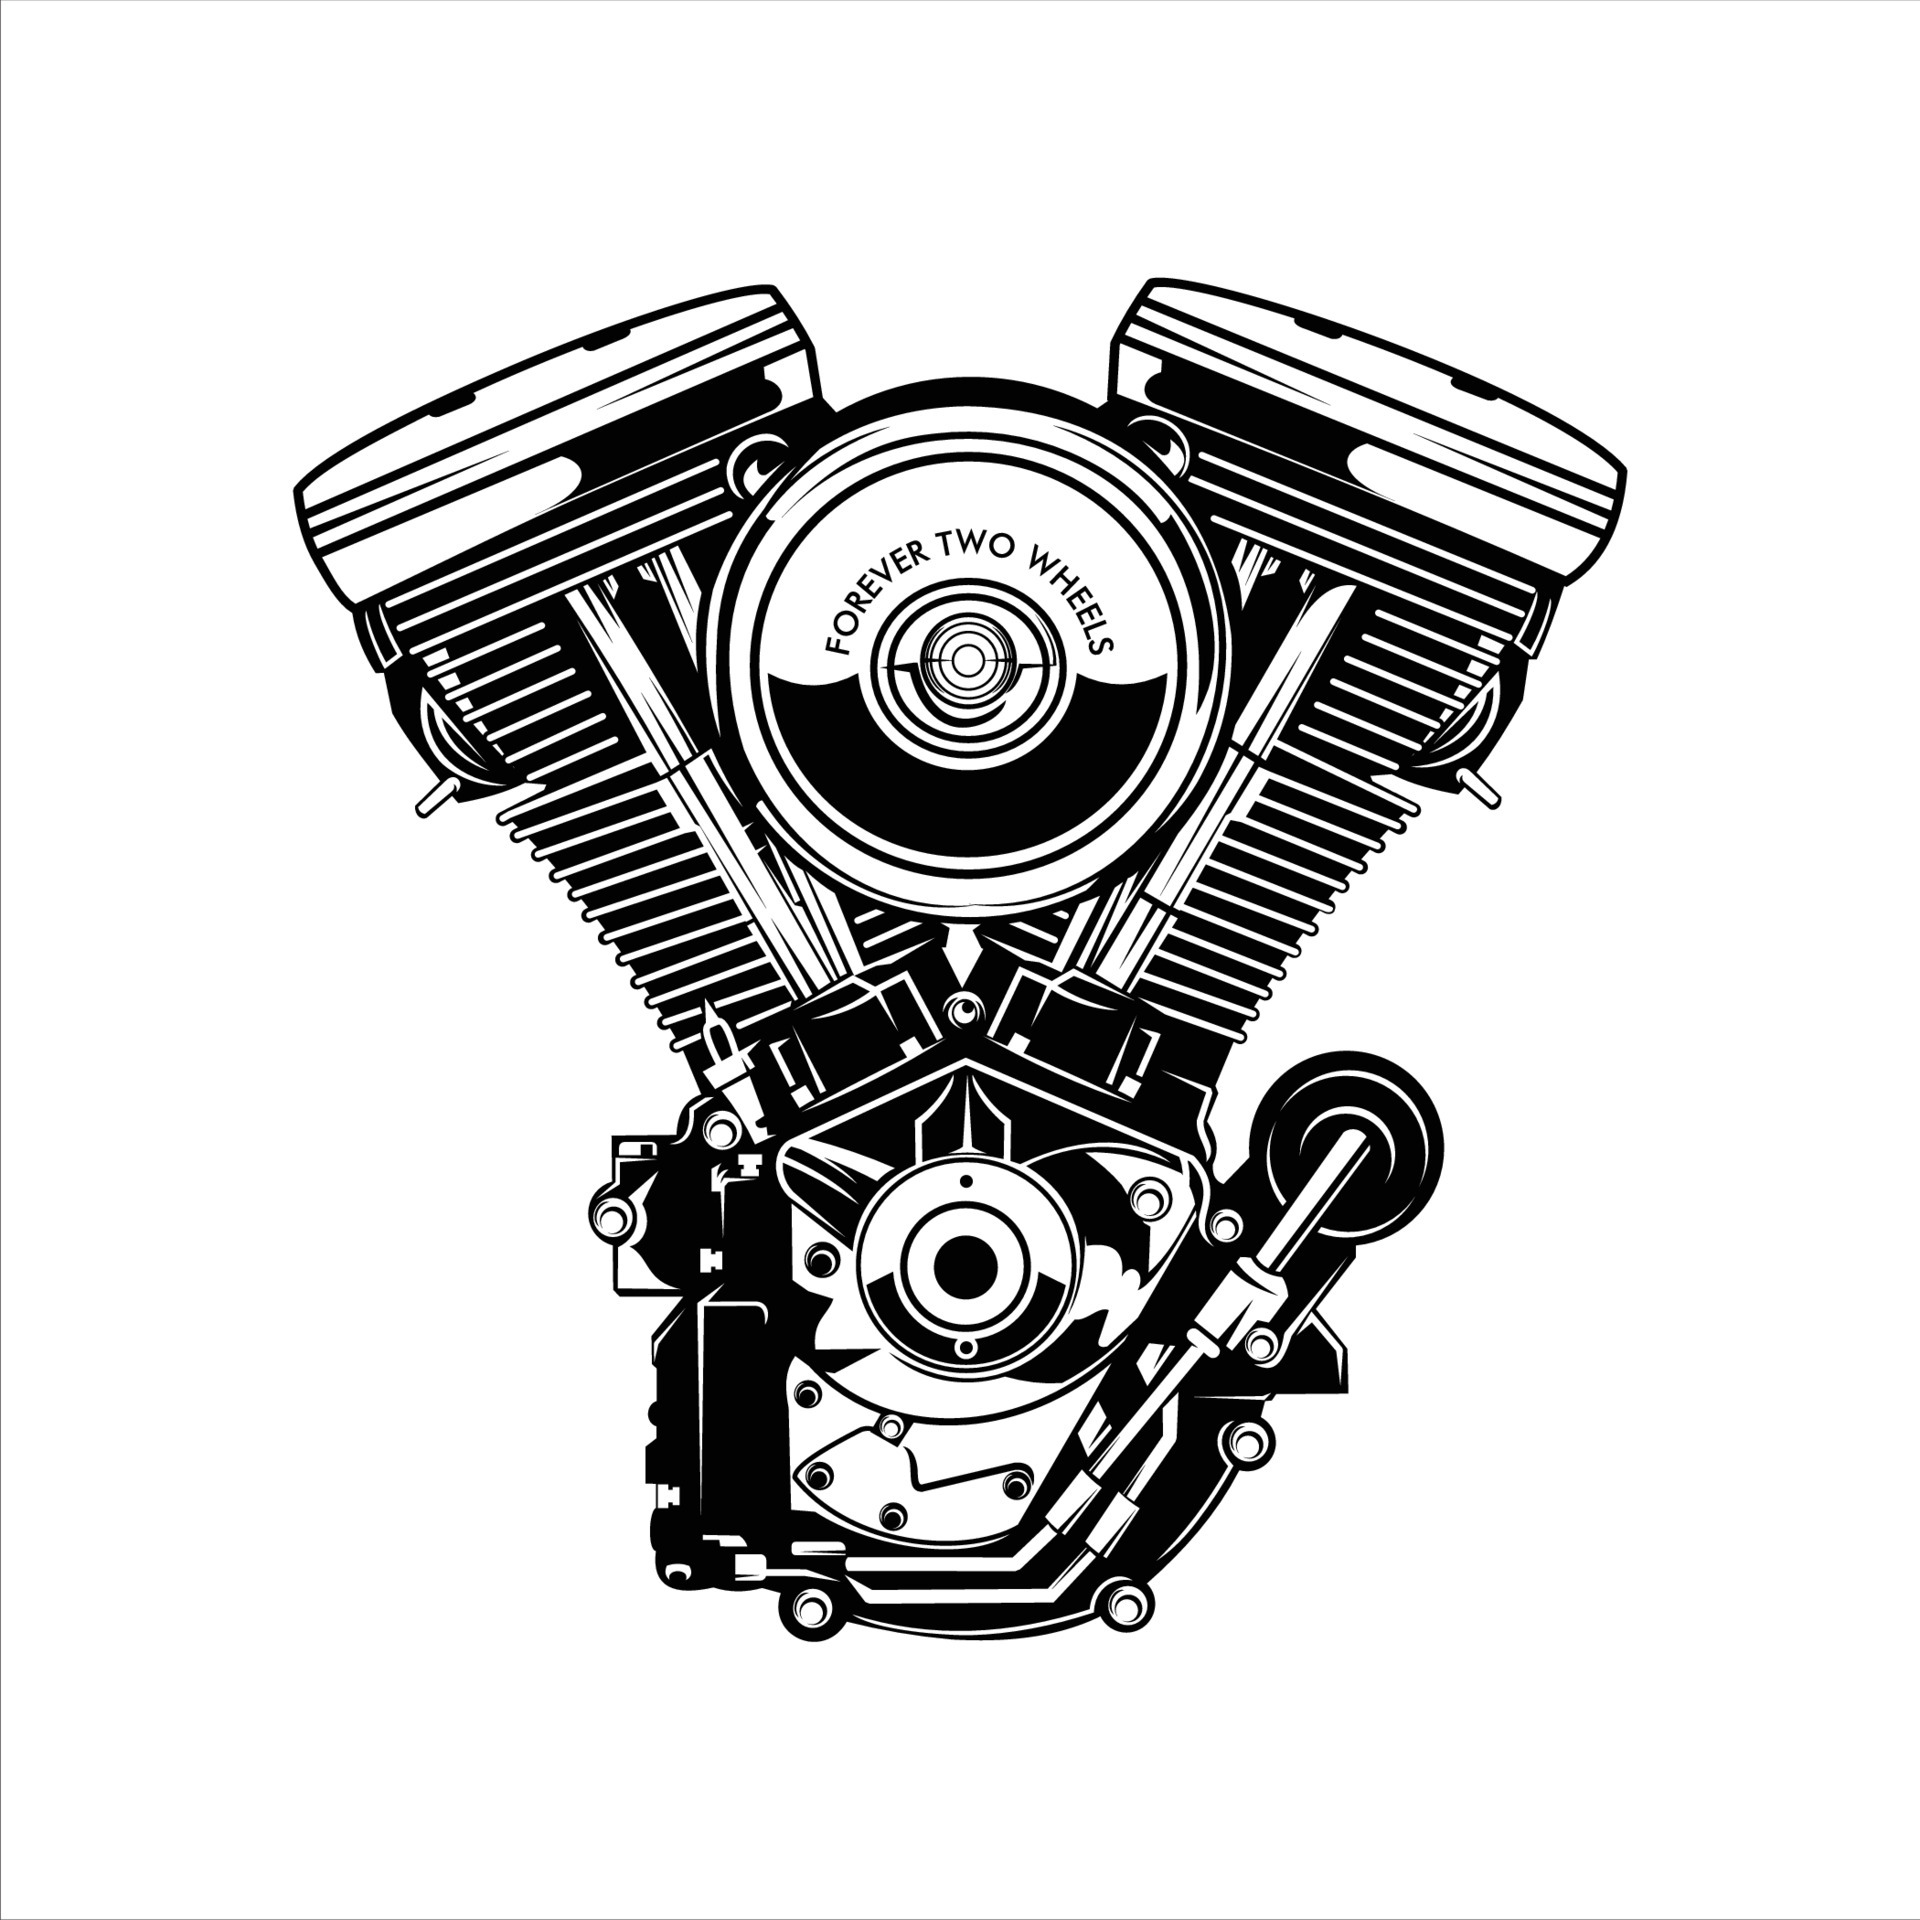 Premium Vector, Motorcycle engine